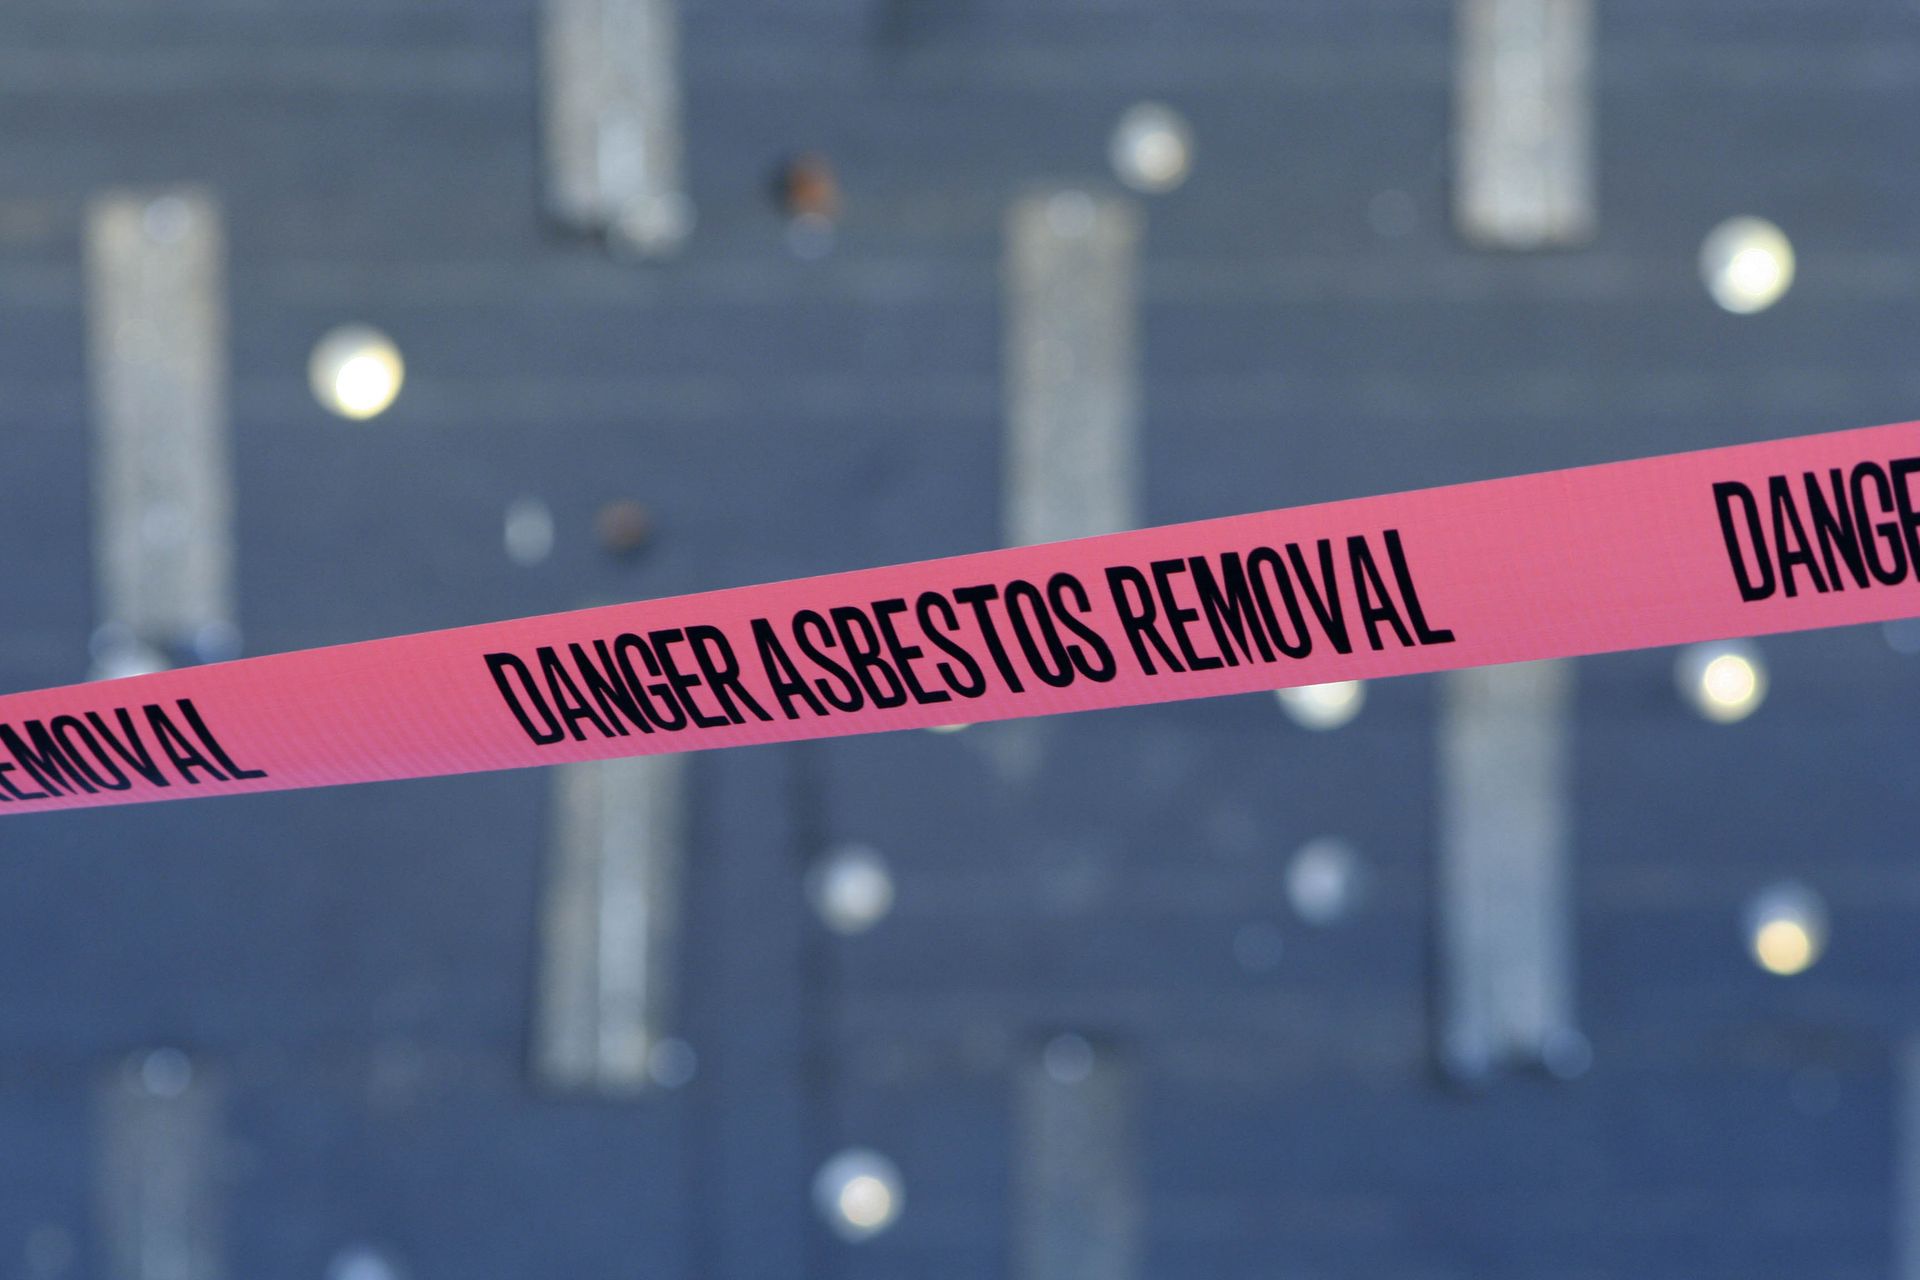 local asbestos abatement contractor